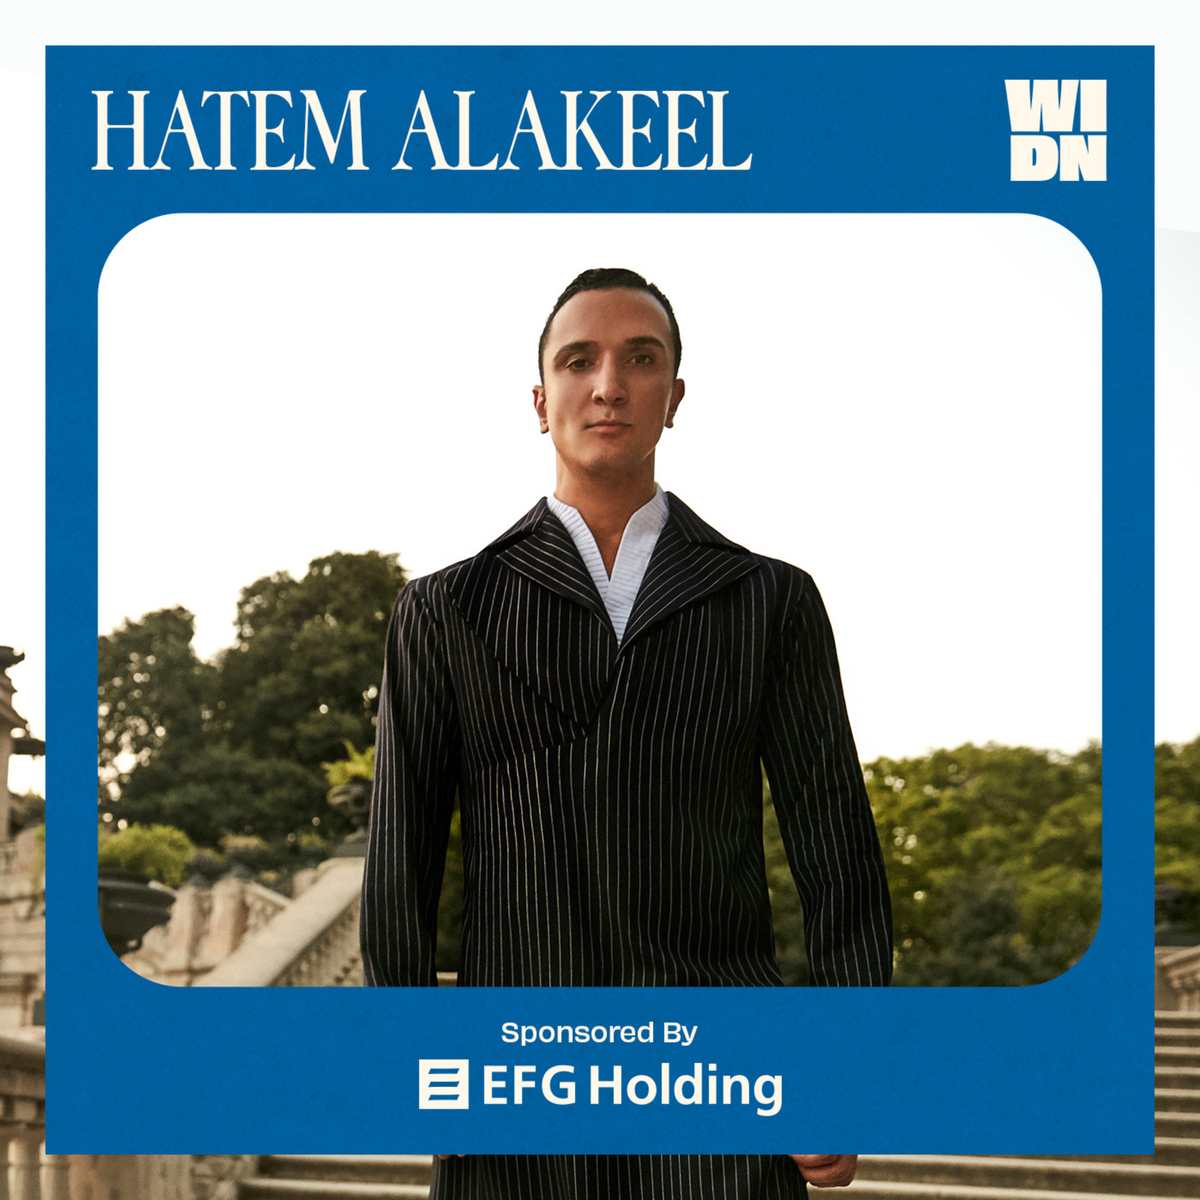 Hatem Alakeel